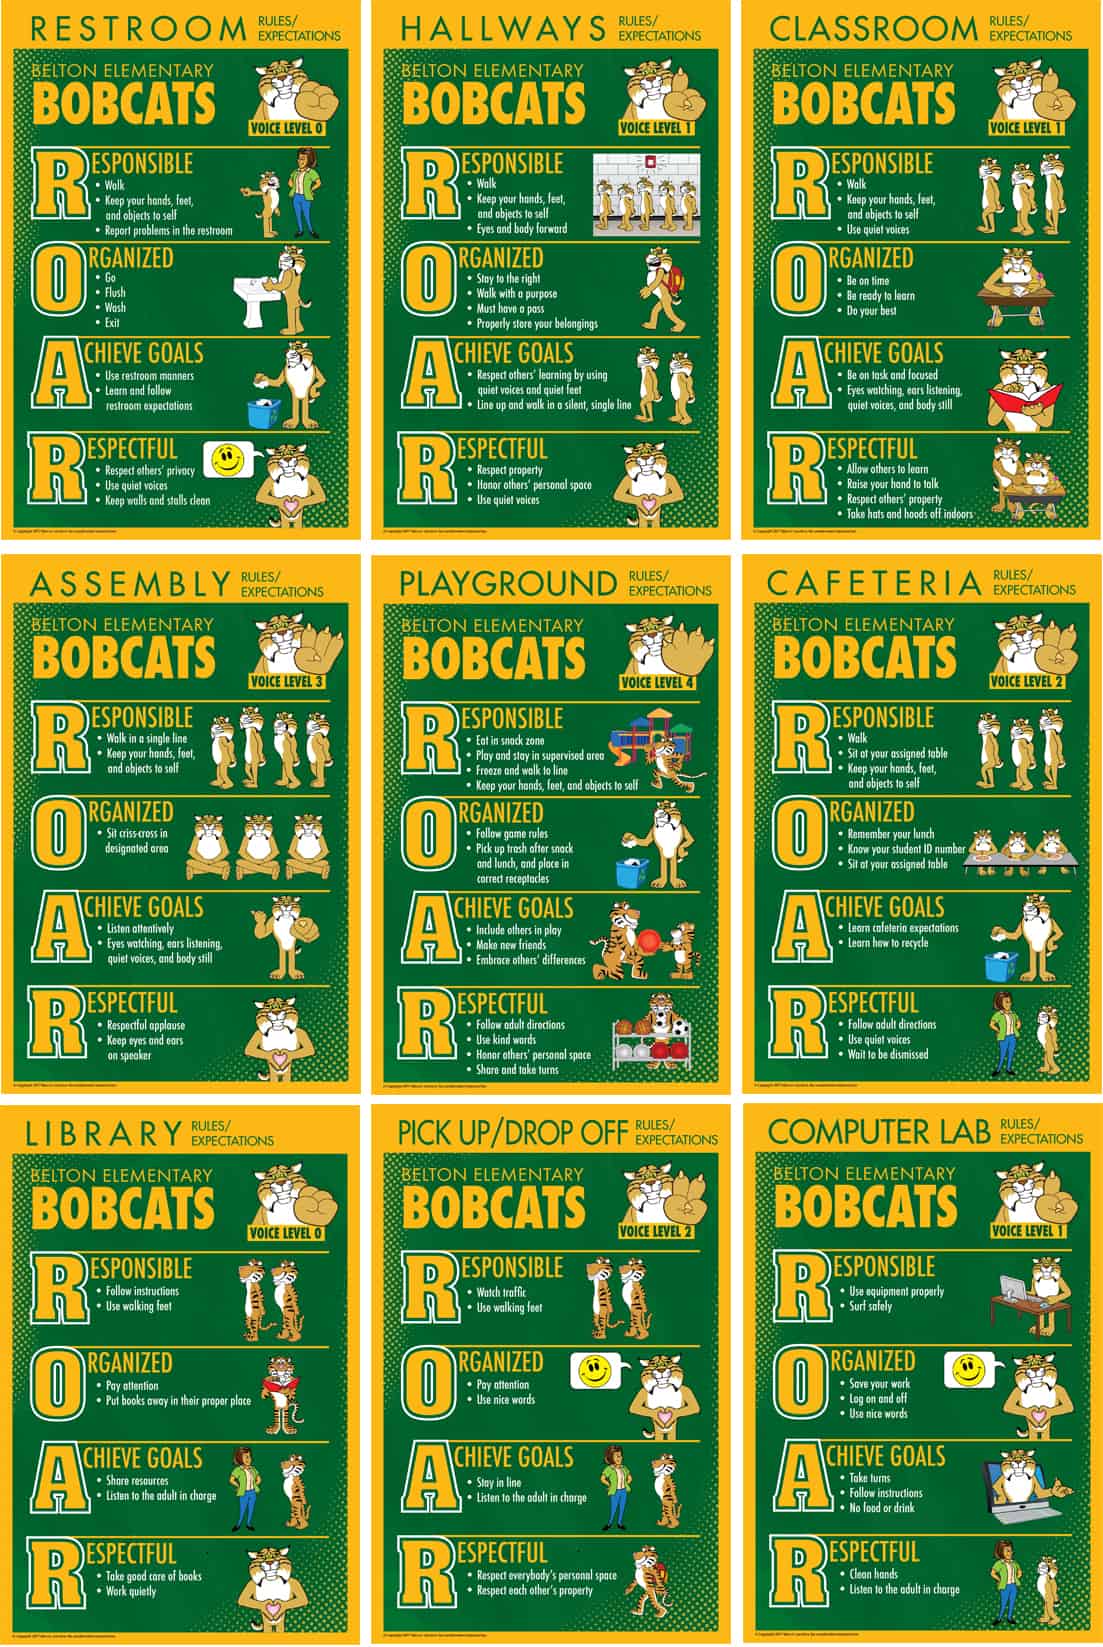 Rules Posters Bobcat PBIS